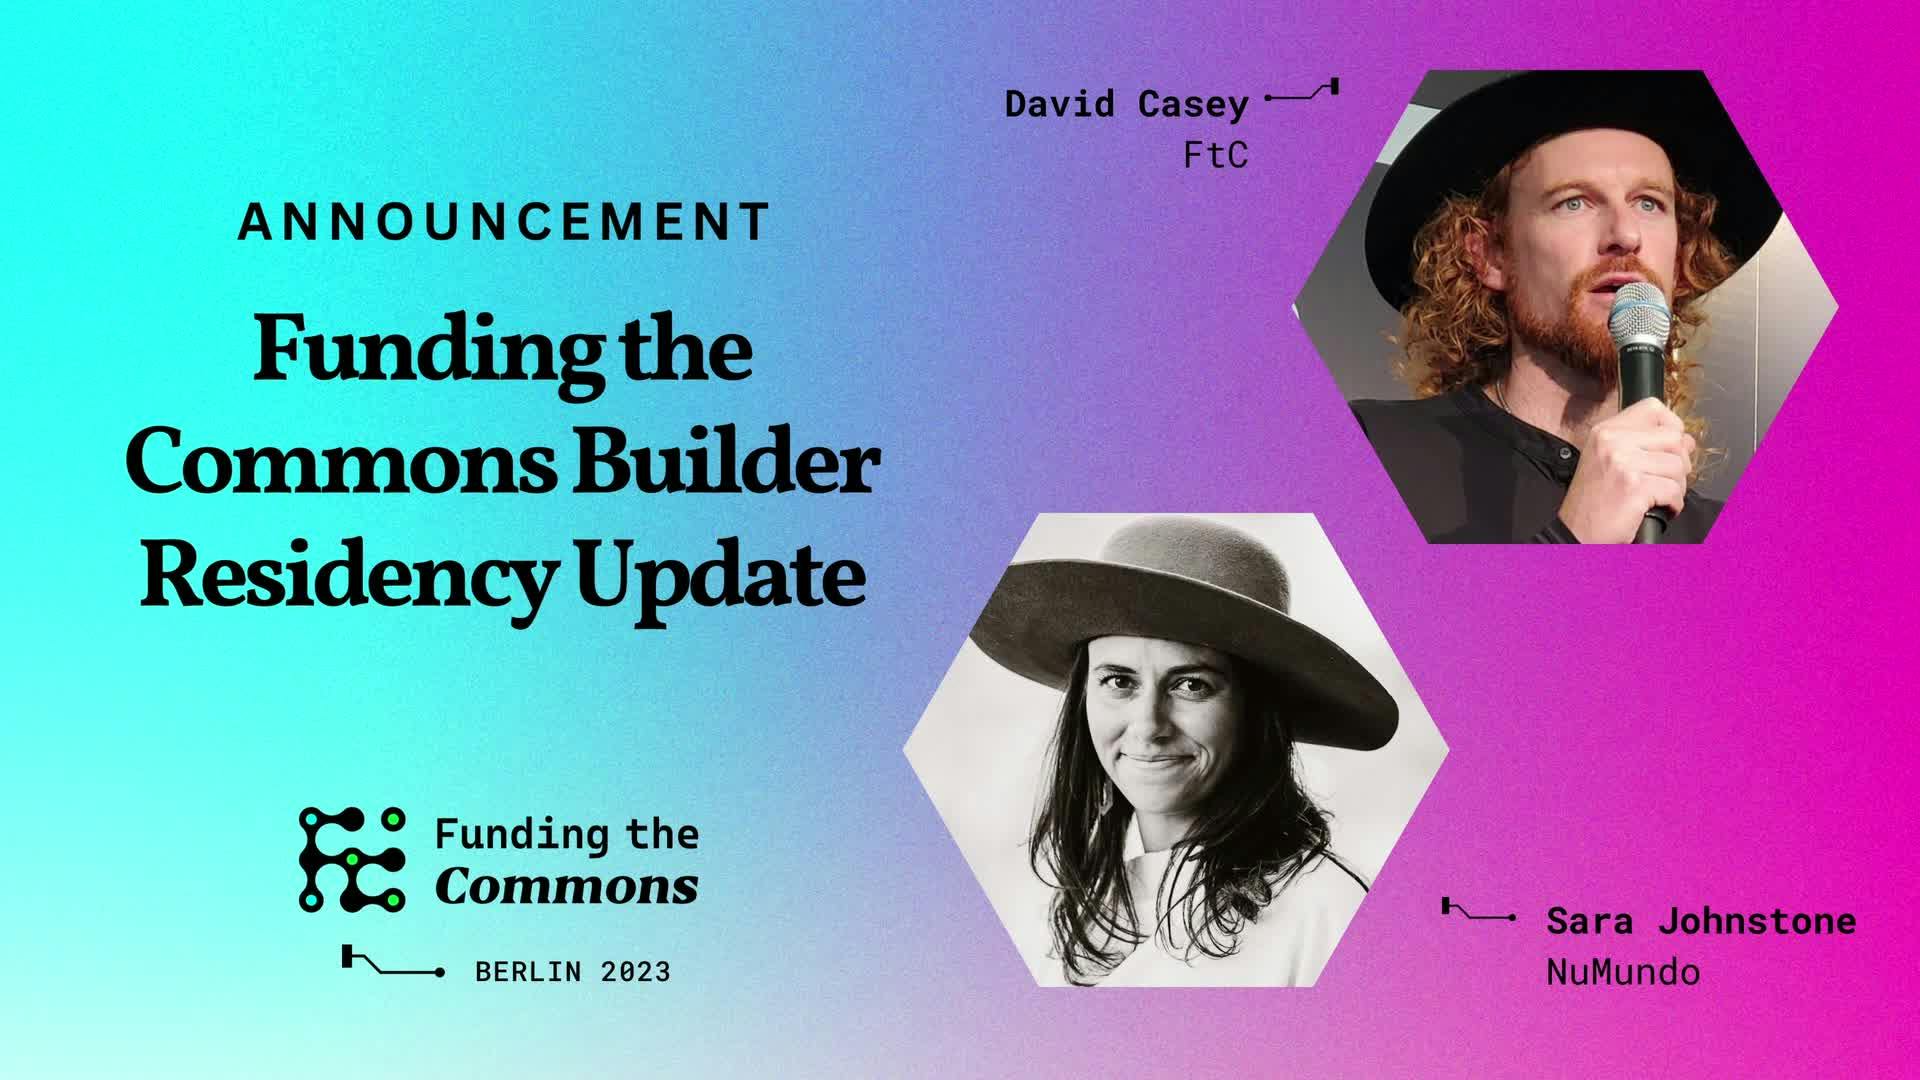 Funding the Commons Builder Residency Update